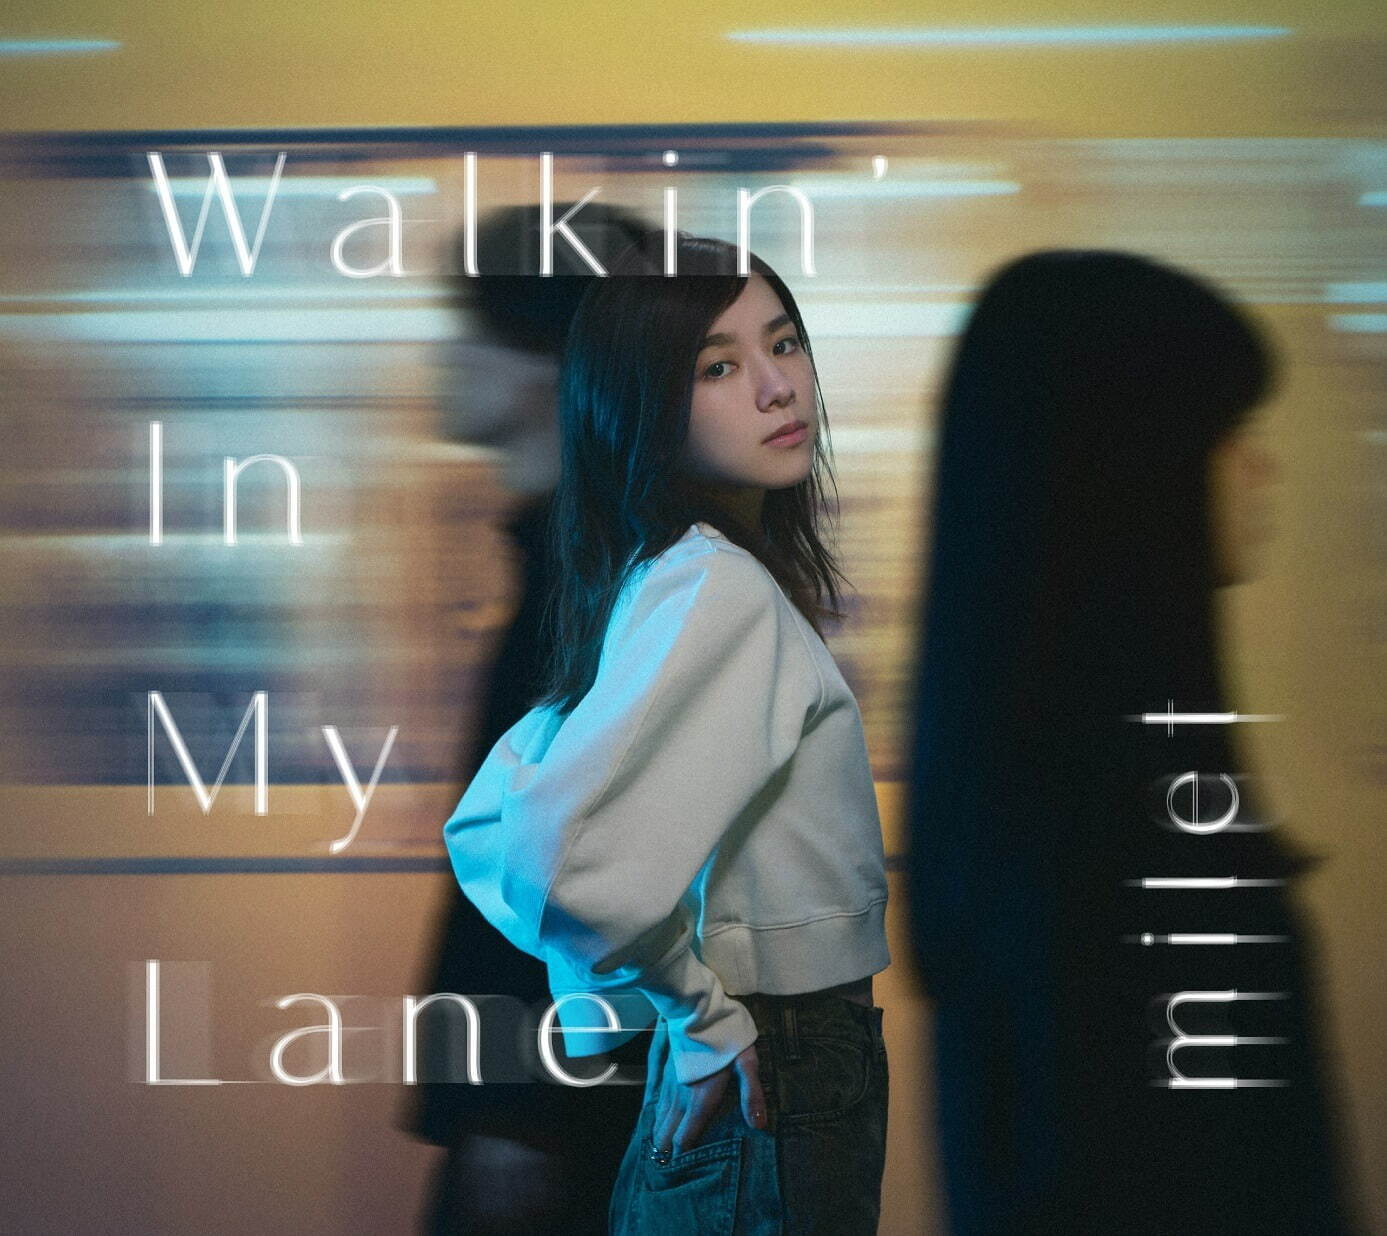 milet 最新EP『Walkin’ In My Lane』 初回生産限定盤A 3,800円